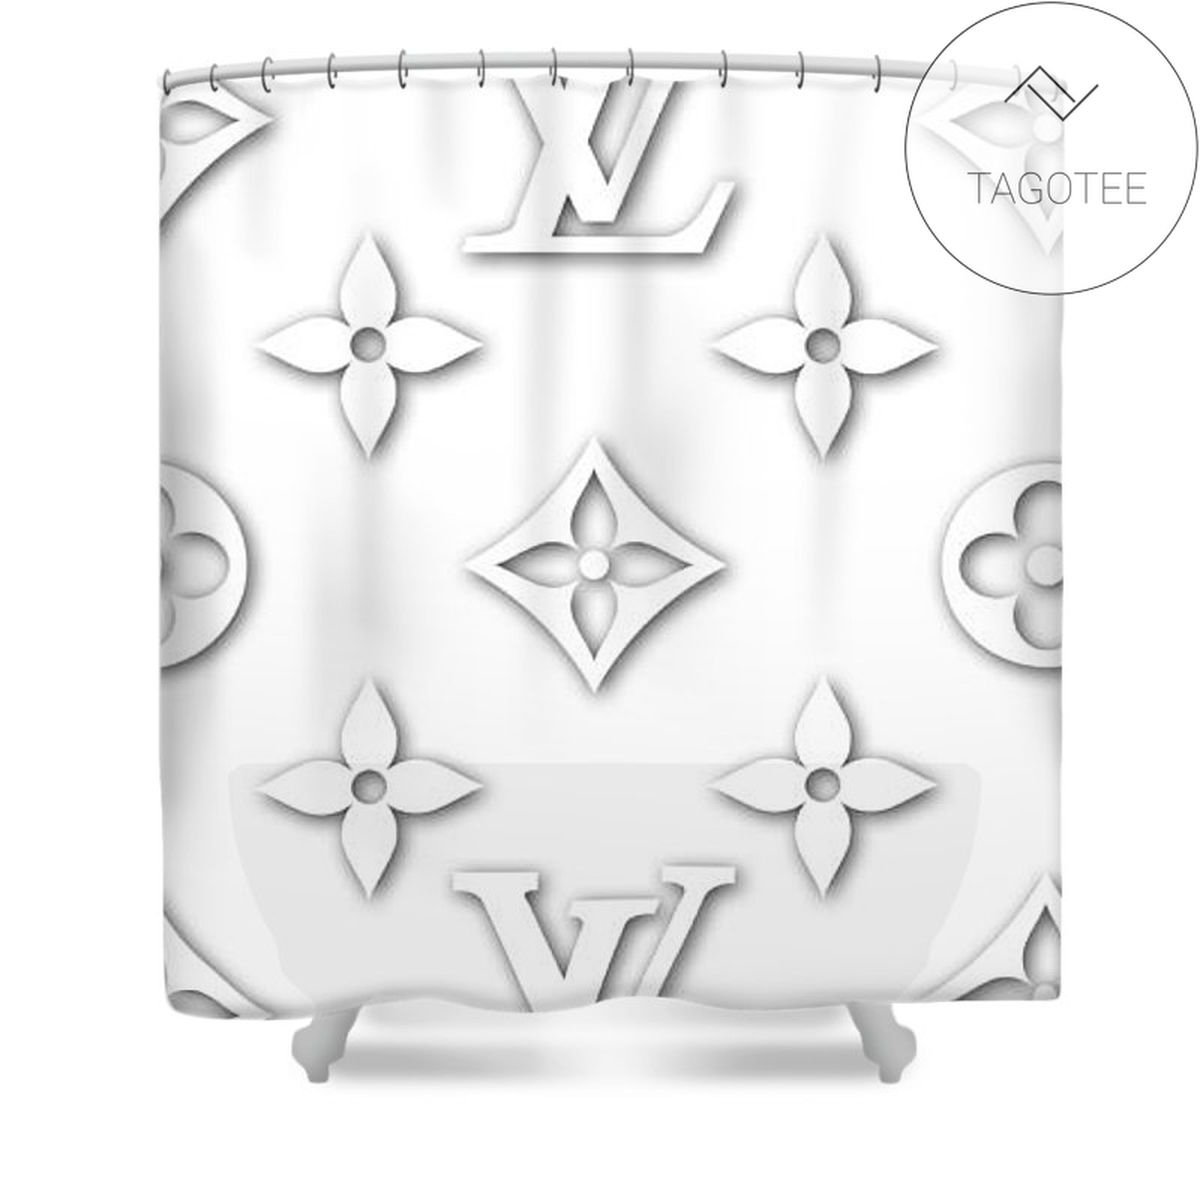 Lv Luxury Type 70 Shower Curtain Waterproof Luxury Bathroom Mat Set